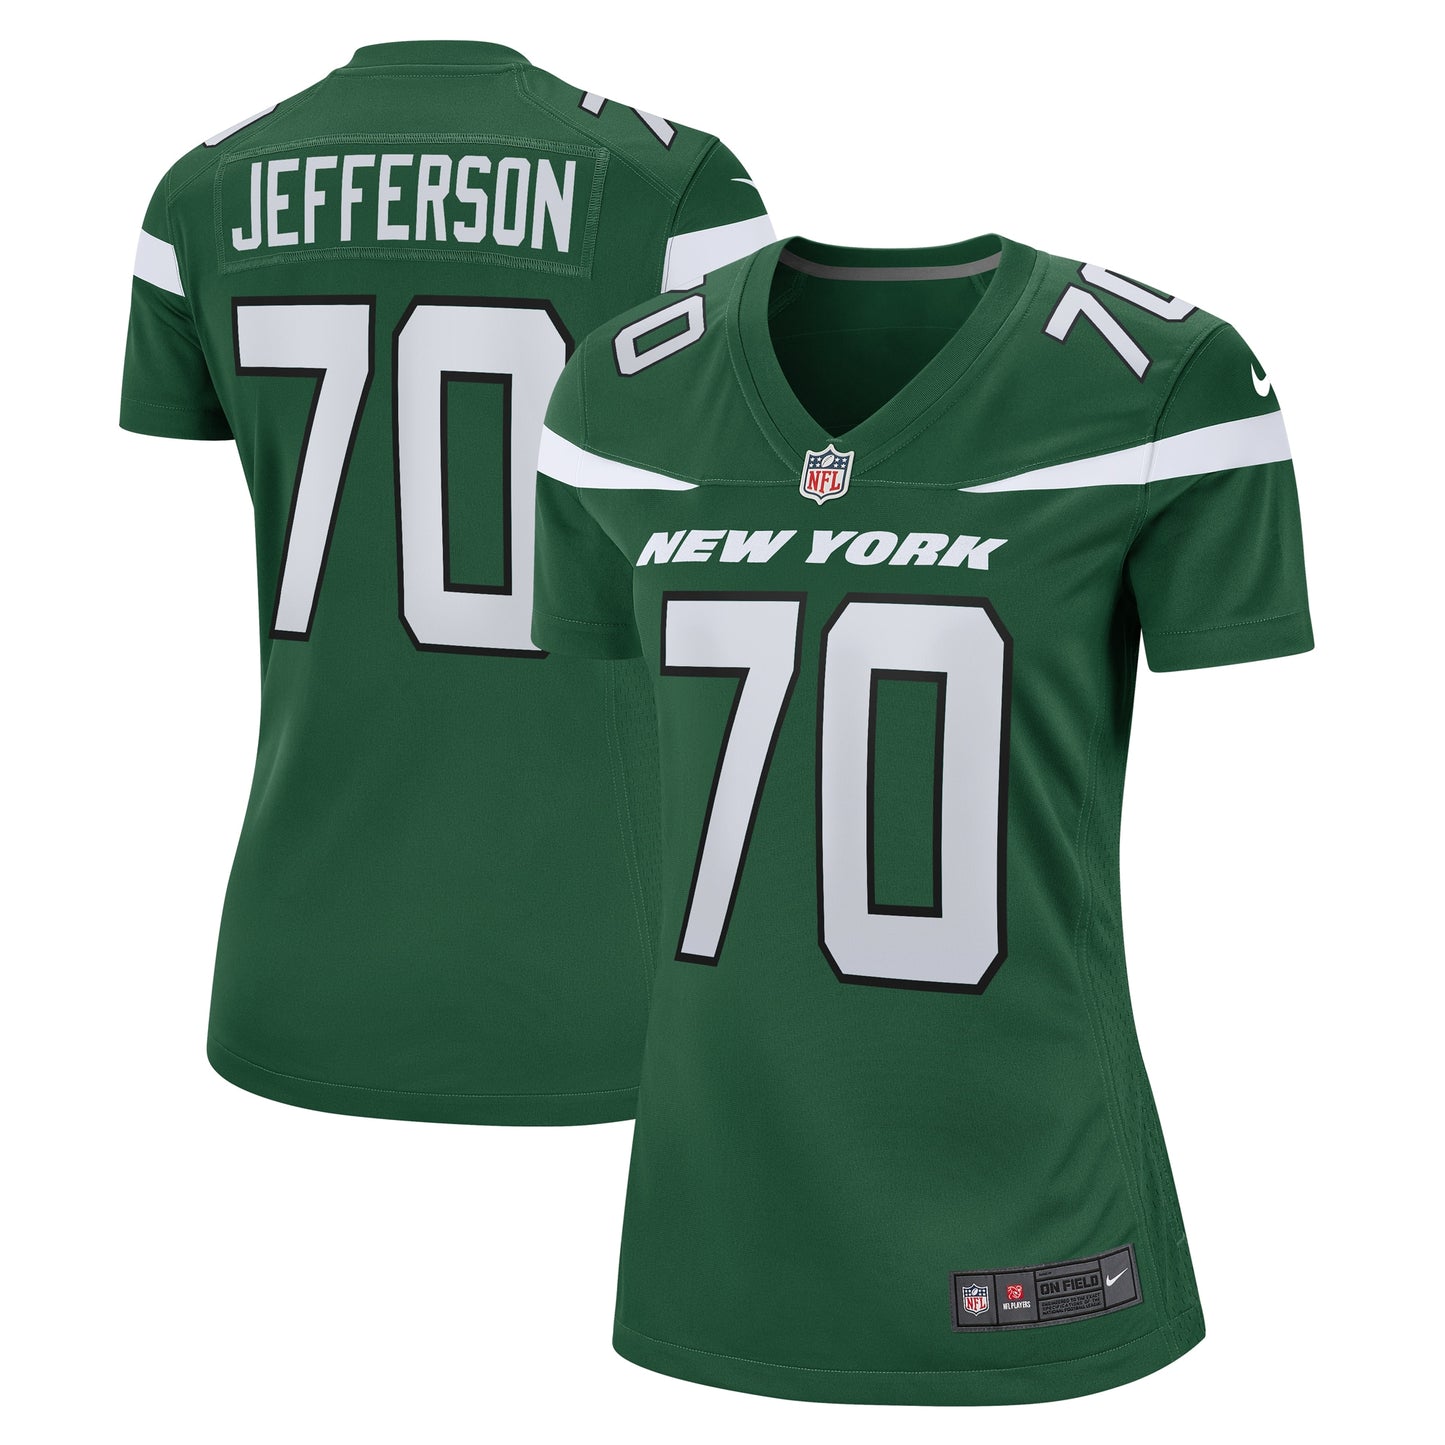 Quinton Jefferson New York Jets Nike Women's Team Game Jersey - Gotham Green